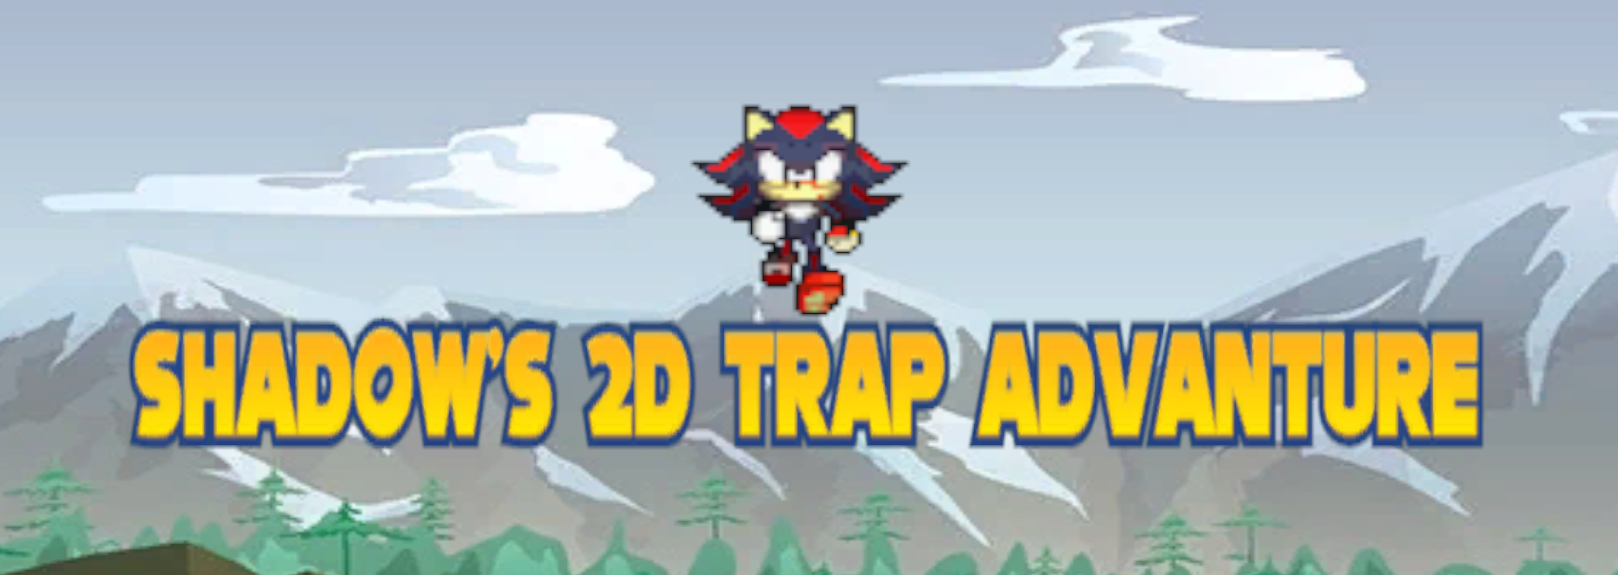 Shadow's 2D Trap Advanture